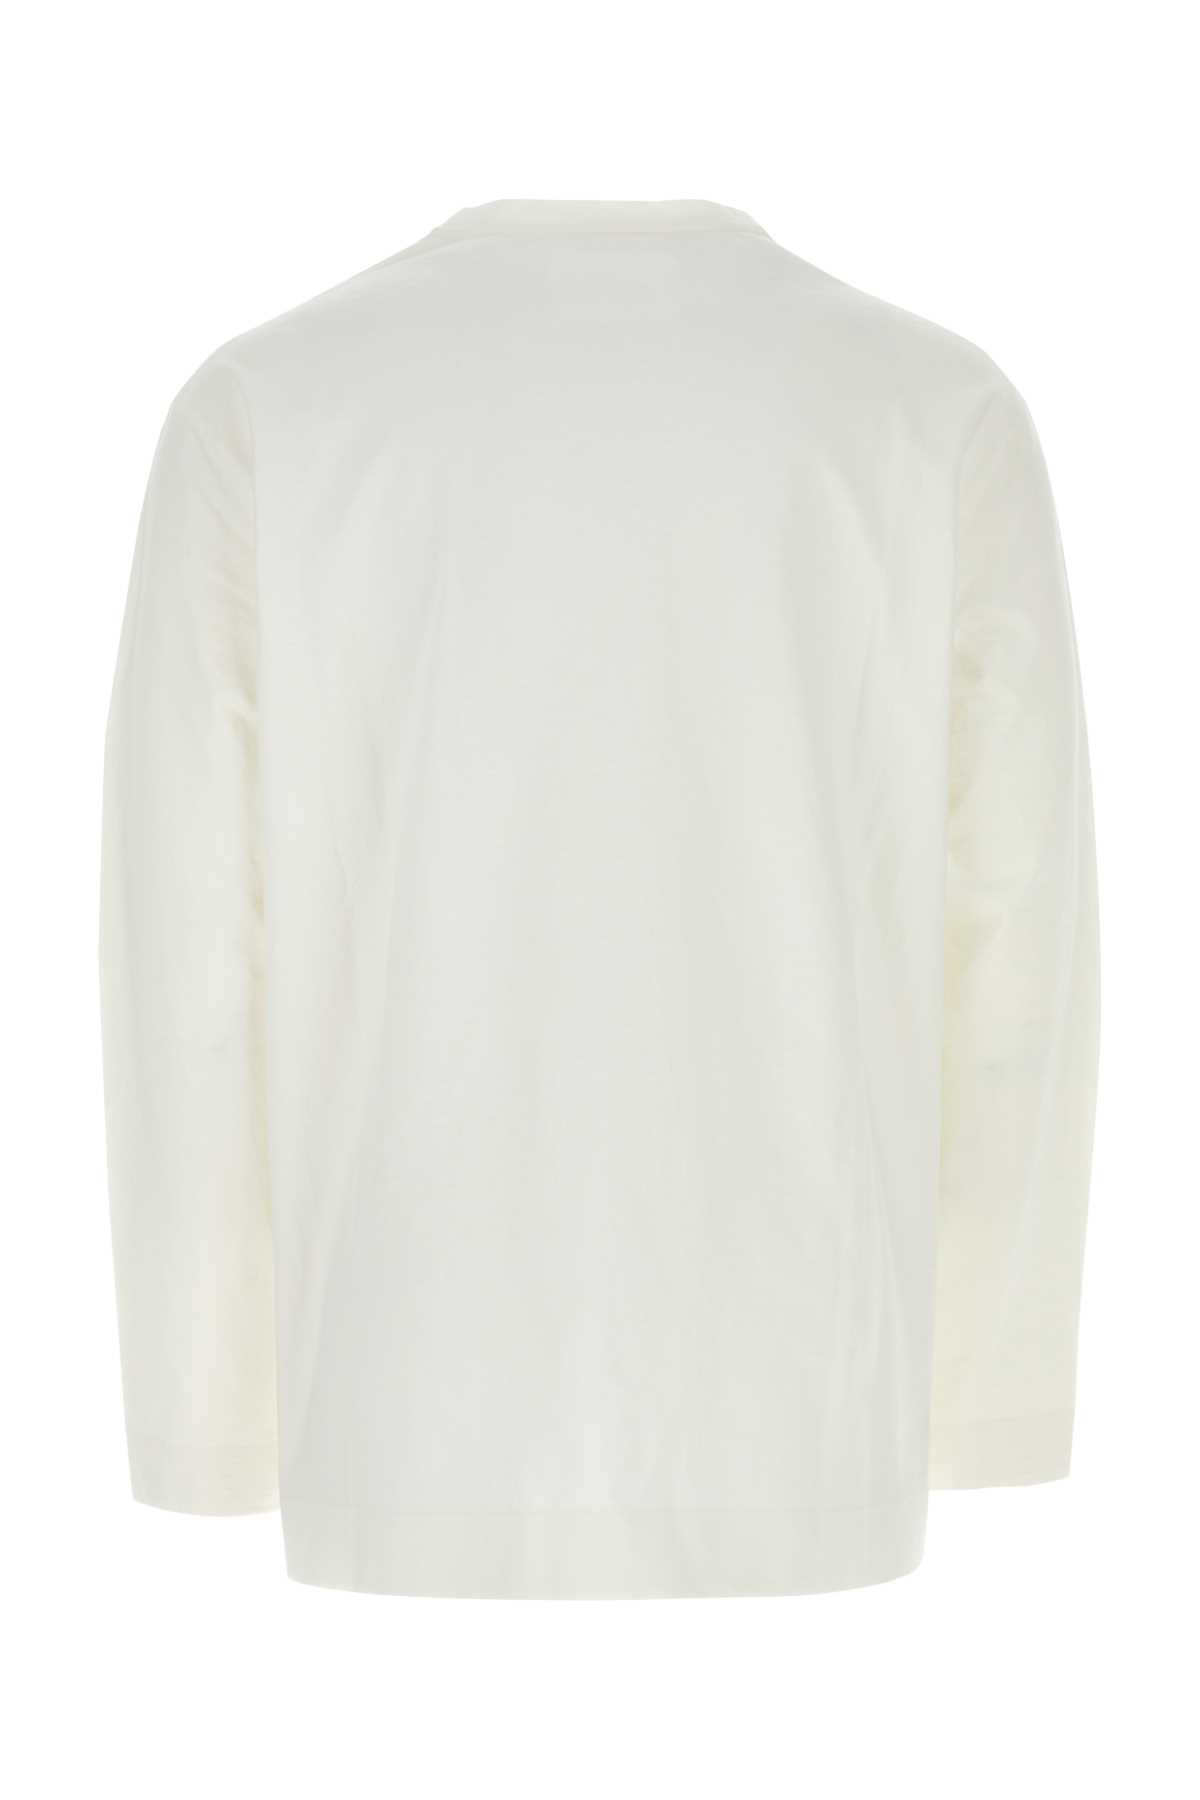 Jil Sander White Stretch Cotton Oversize T-shirt In 102